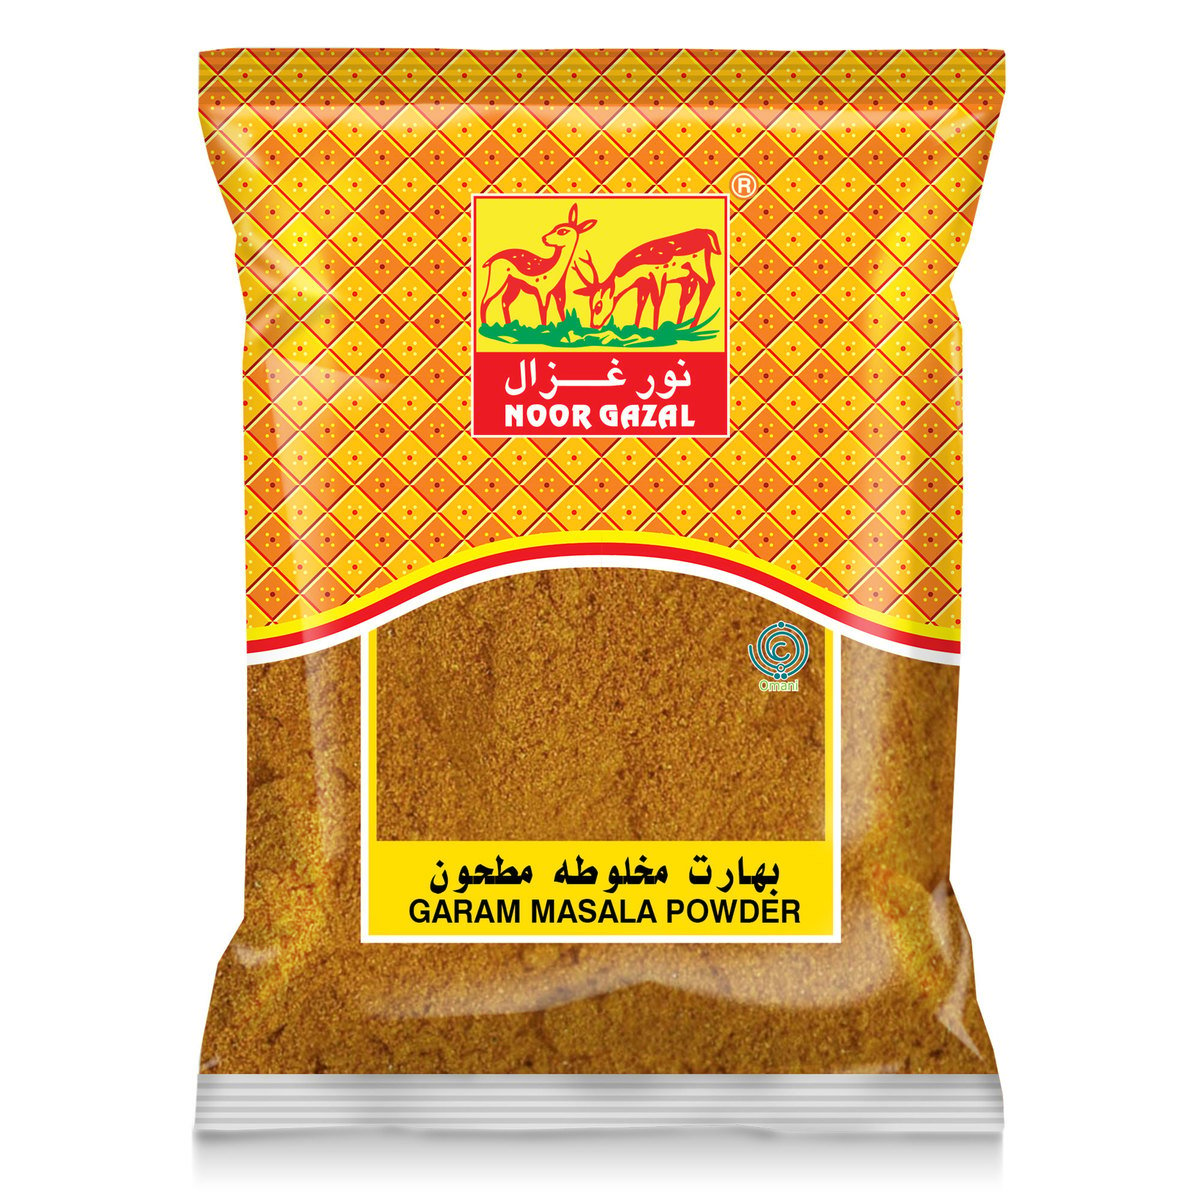 Noor Gazal Garam Masala Powder 200g